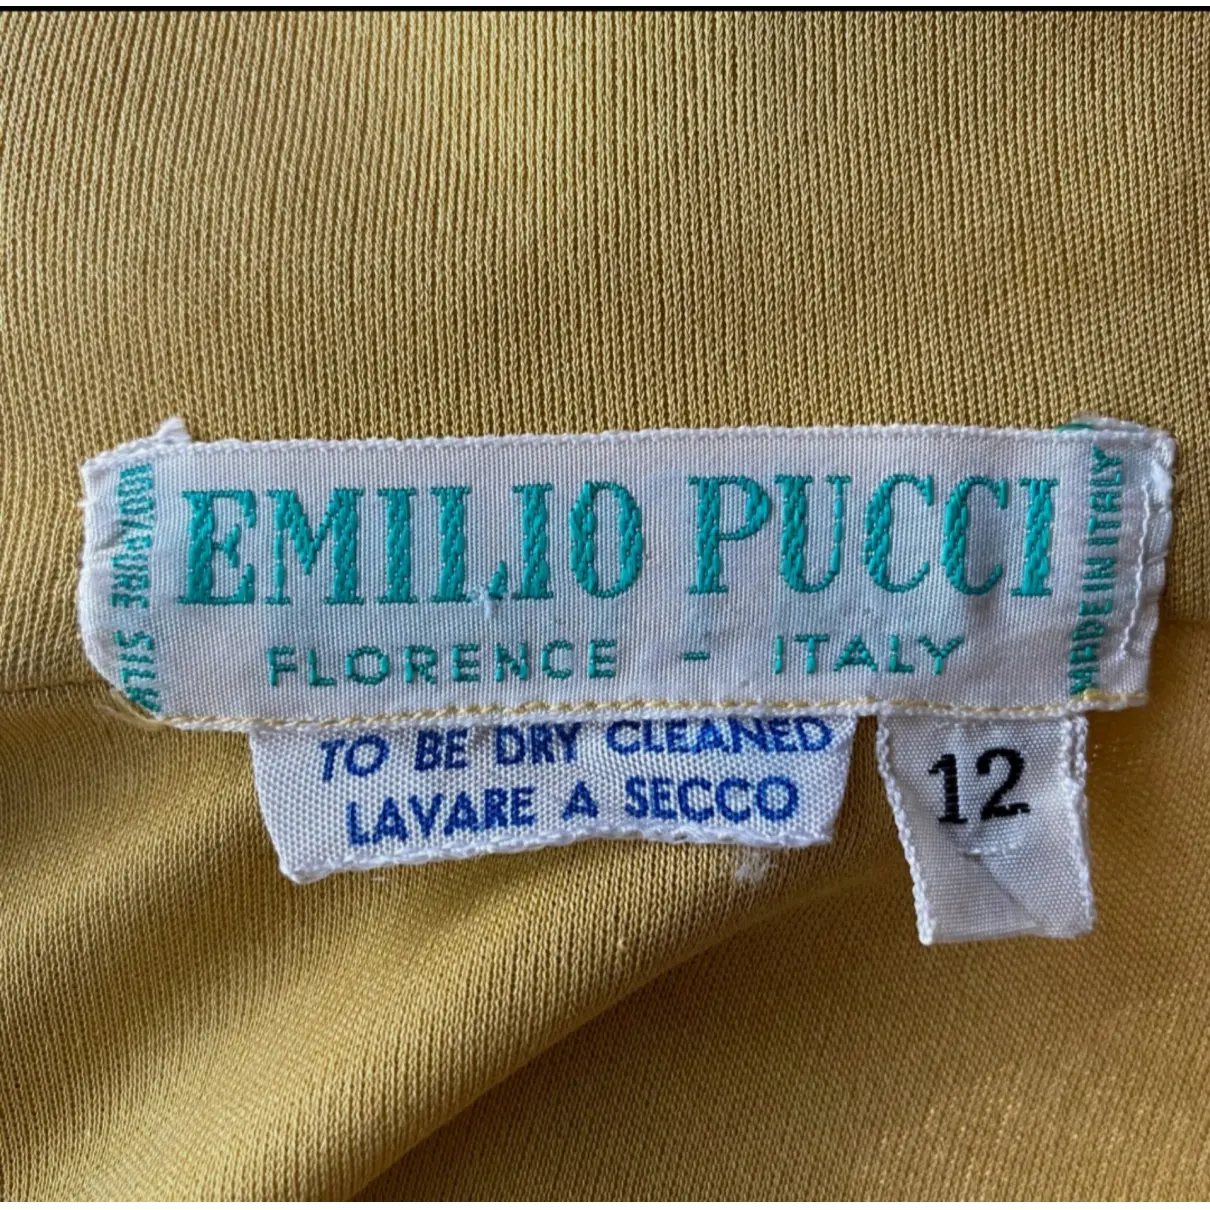 Silk mini dress Emilio Pucci - Vintage